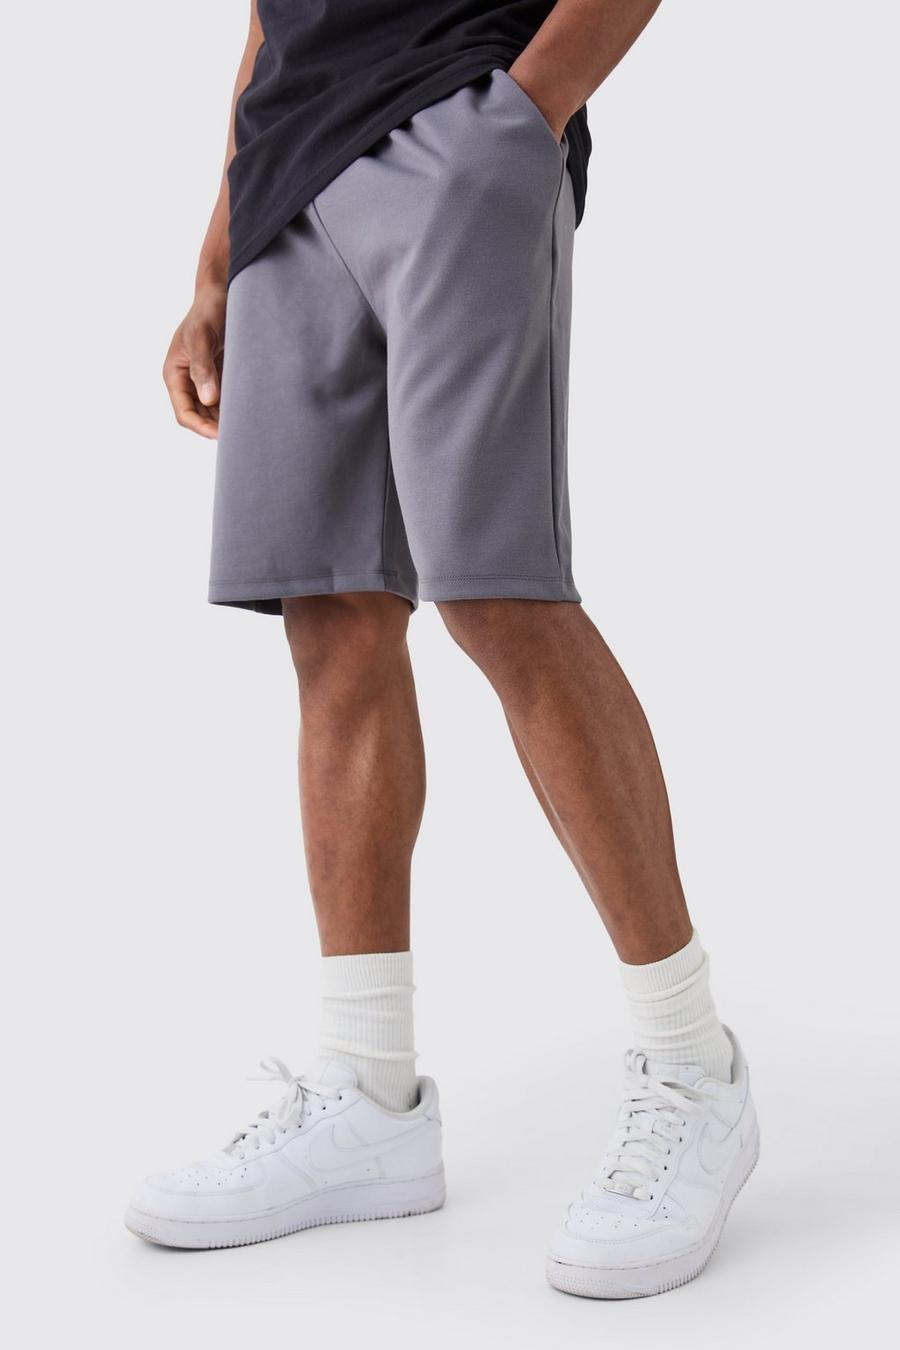 Lockere mittellange Premium Shorts, Charcoal